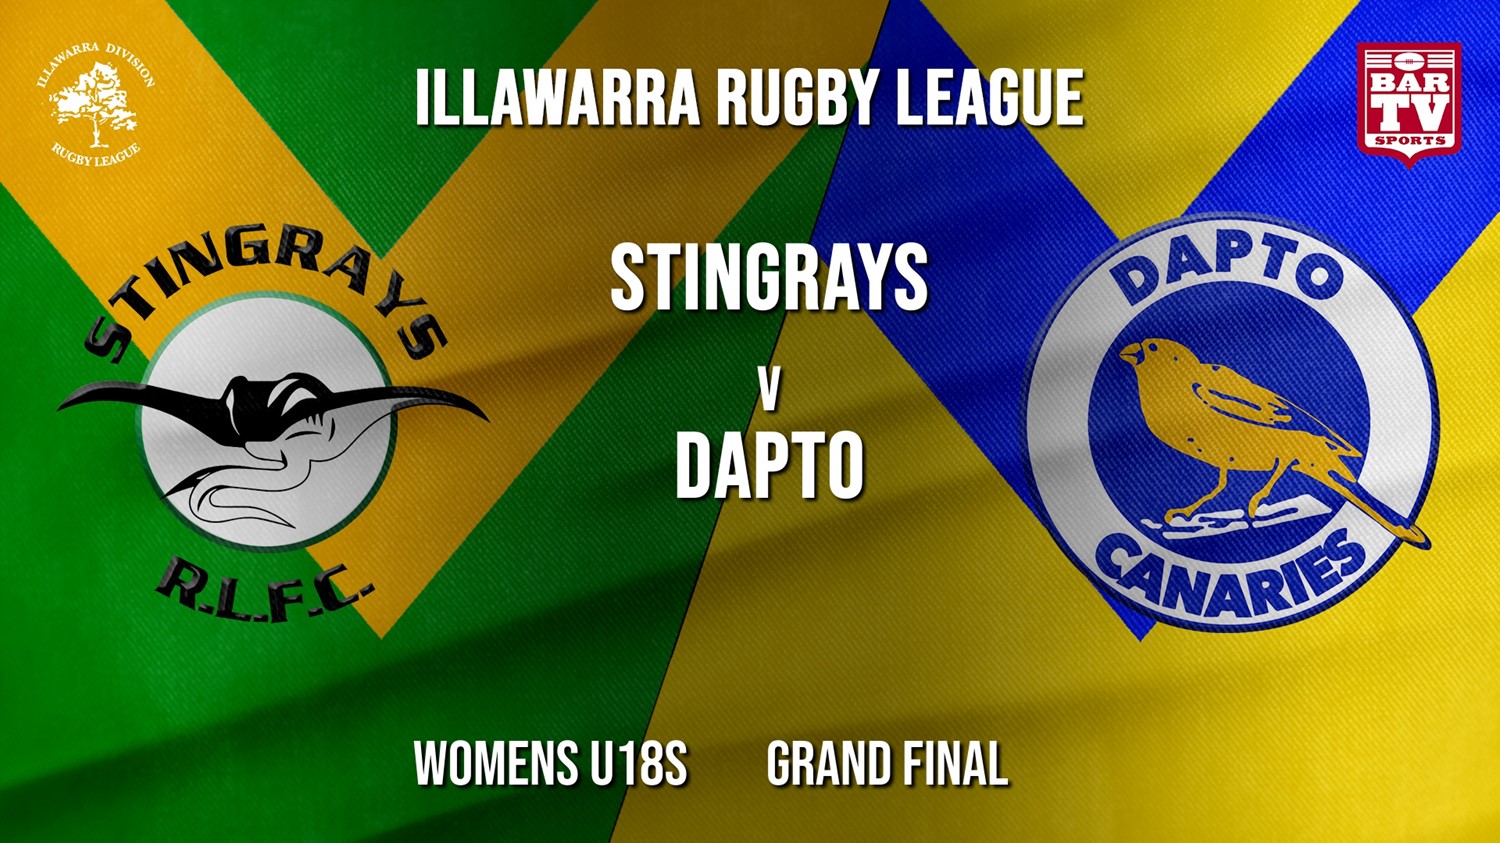 IRL Grand Final - Womens U18s - Stingrays of Shellharbour v Dapto Canaries Minigame Slate Image